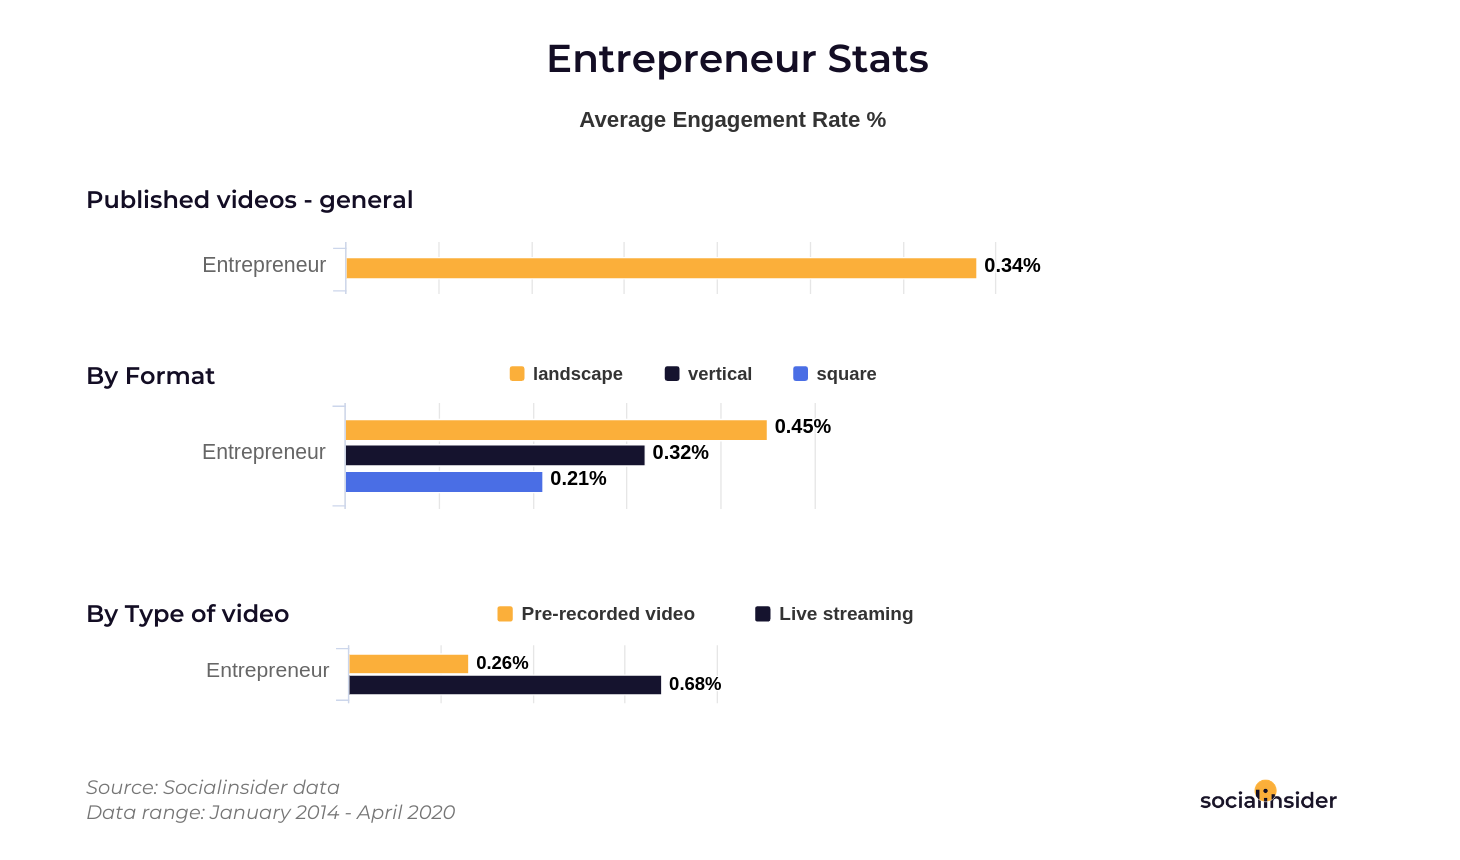 Entrepreneur video stats